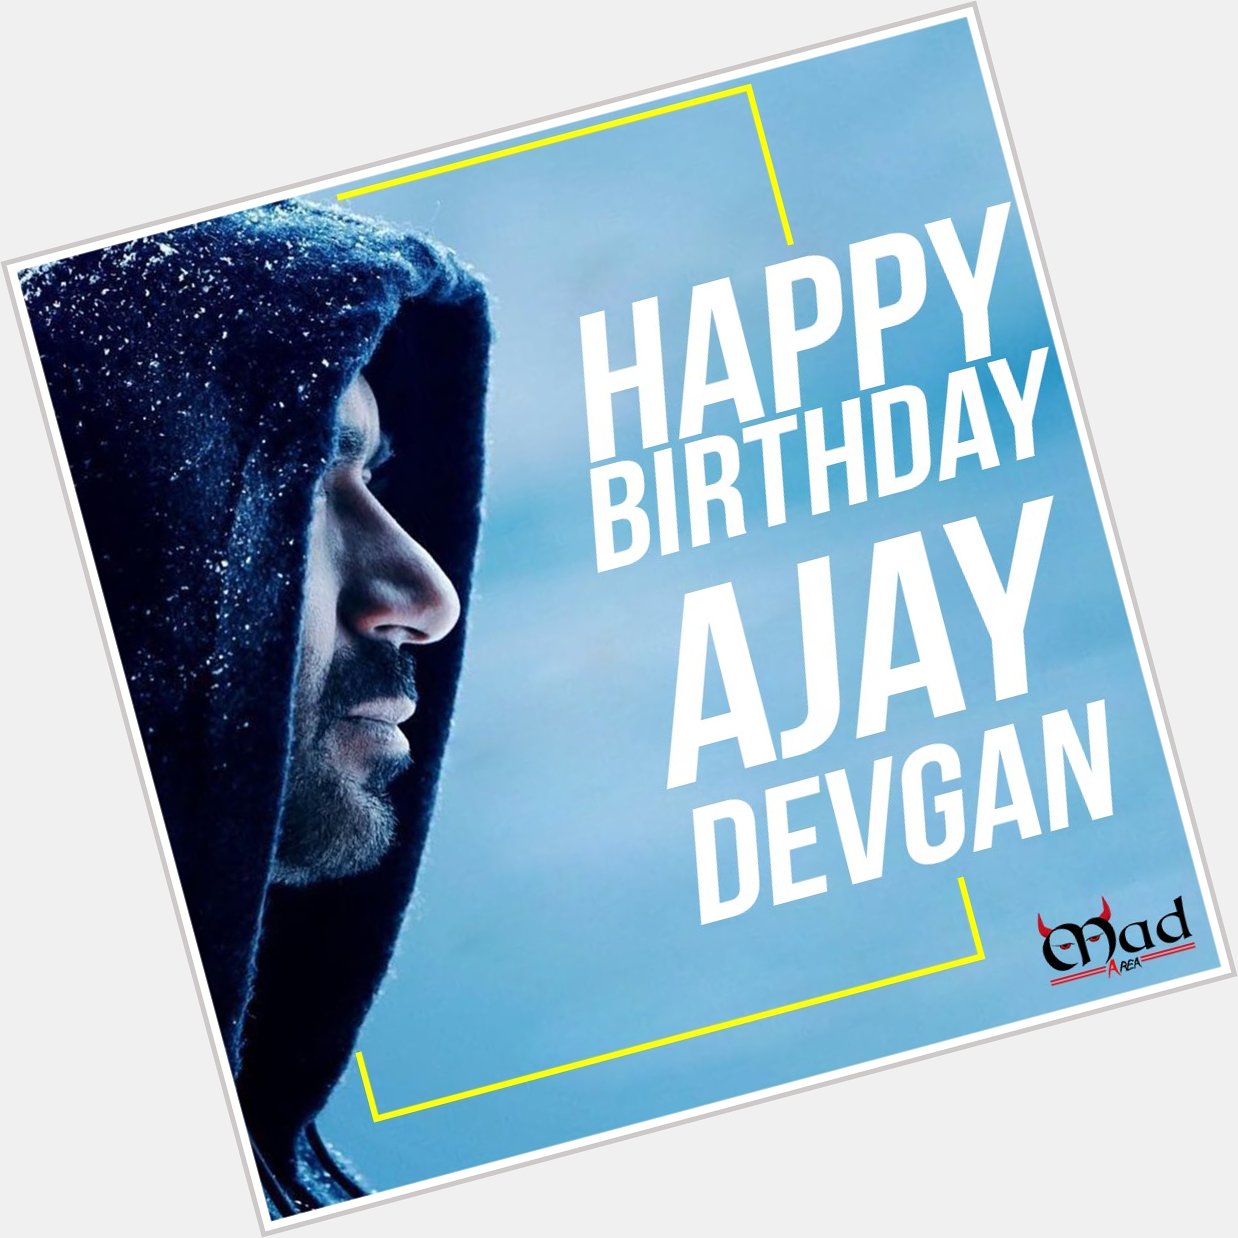 Happy Birthday Ajay Devgan
The Bollywood singham
We all love you  